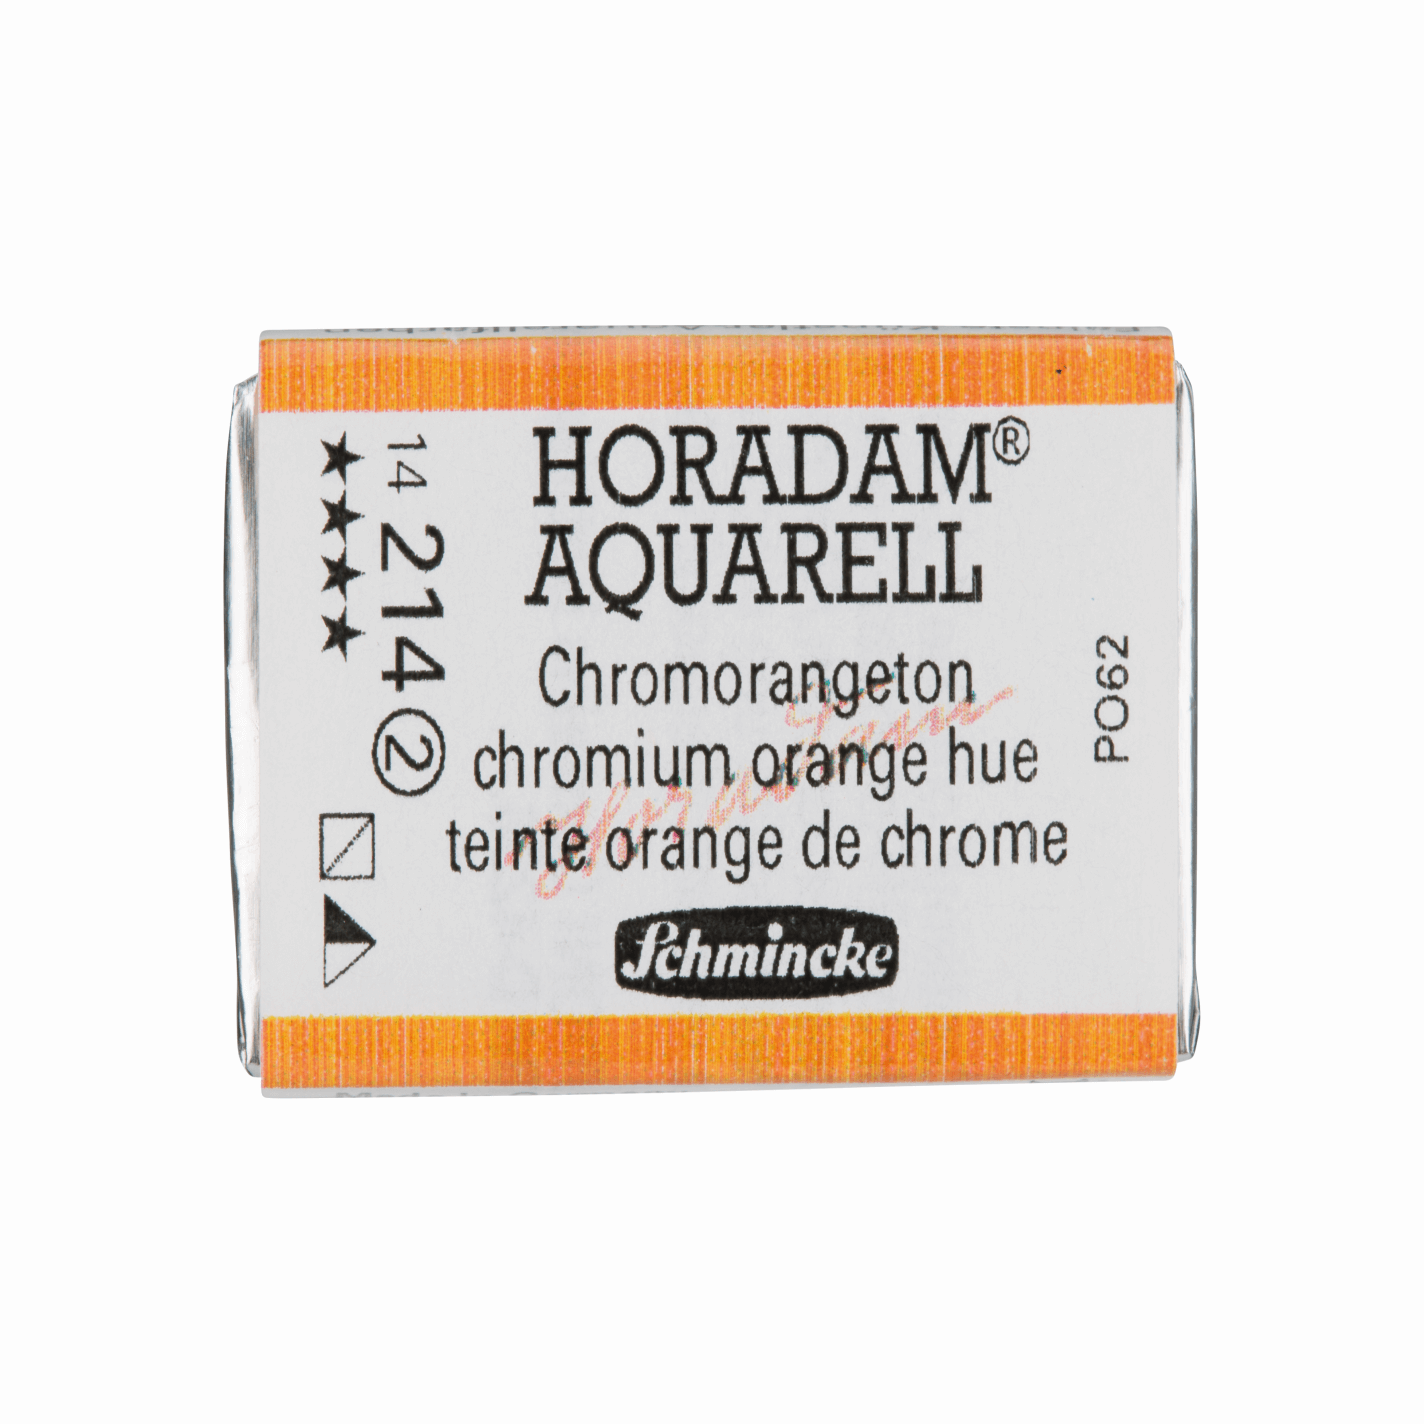 Schmincke Horadam Aquarell pans 1/1 pan Chromium Orange Hue